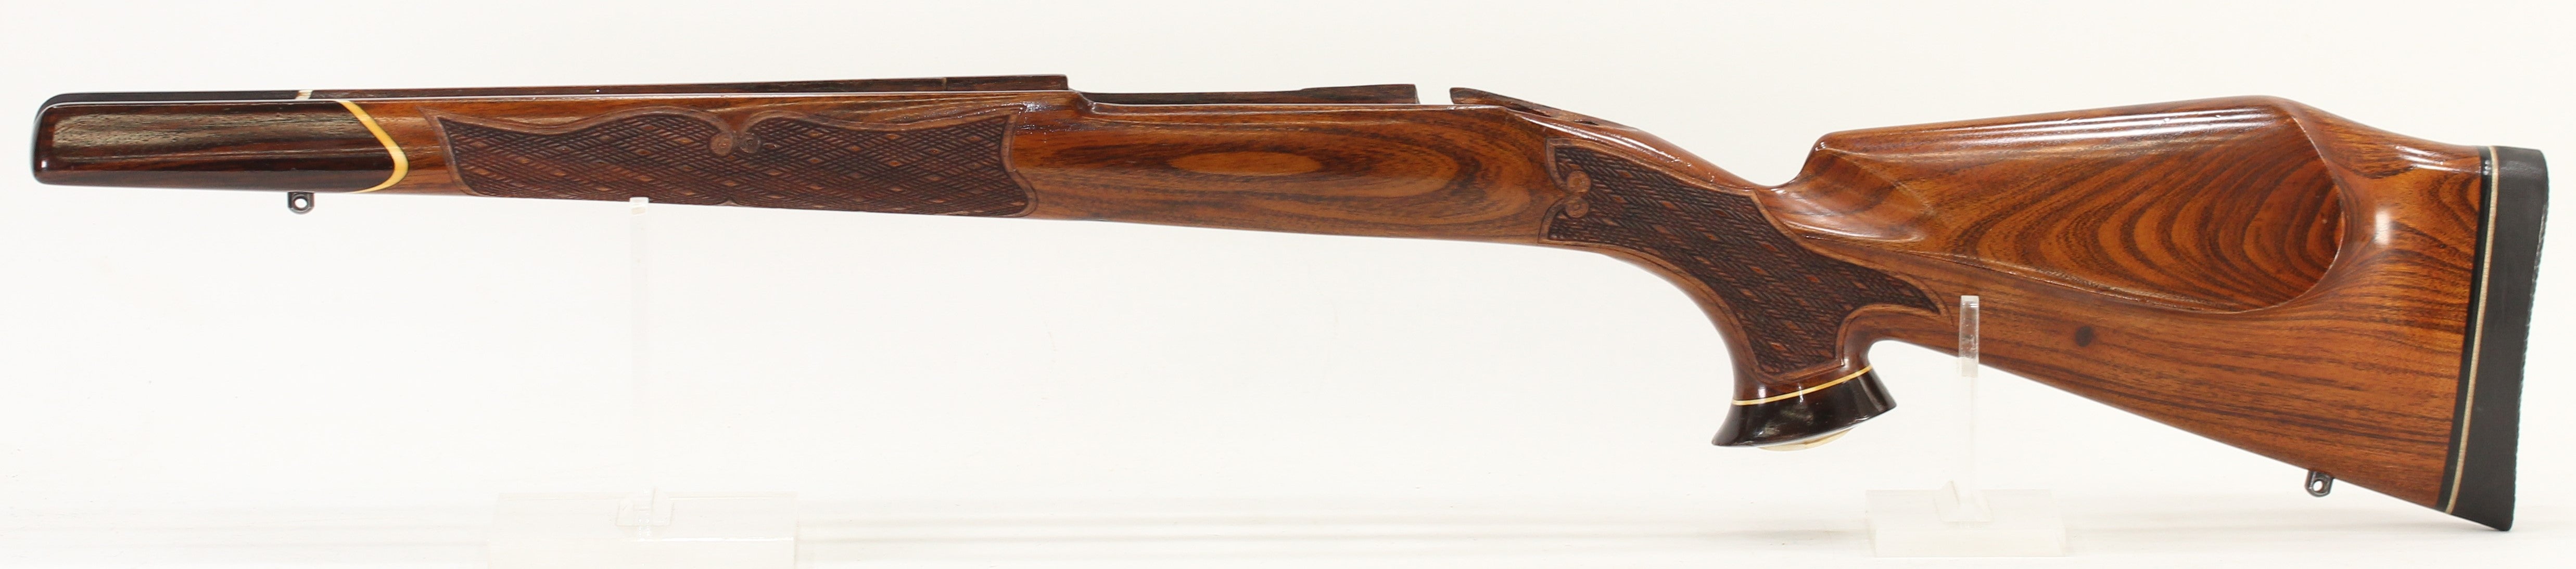 Custom Monte Carlo Rifle Stock for Post War Standard Receiver